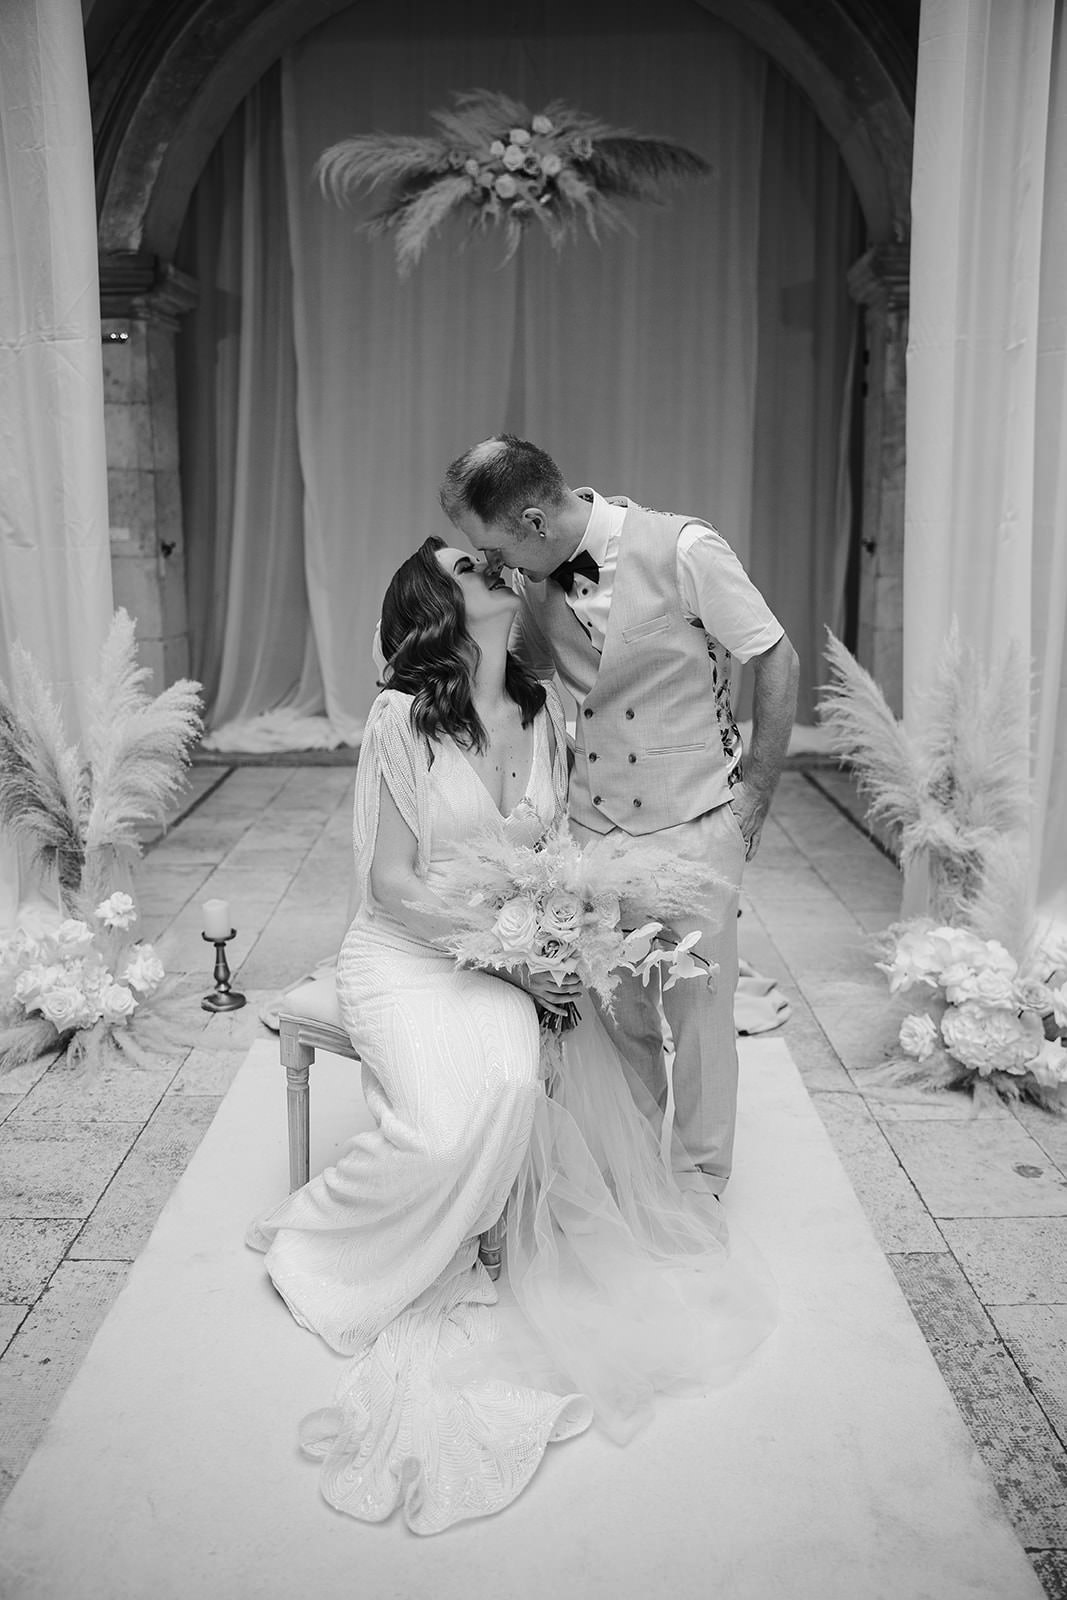 Sponza Palace Wedding Villa Rose Nicola Darren 15 | Croatia Elopement Photographer and Videographer